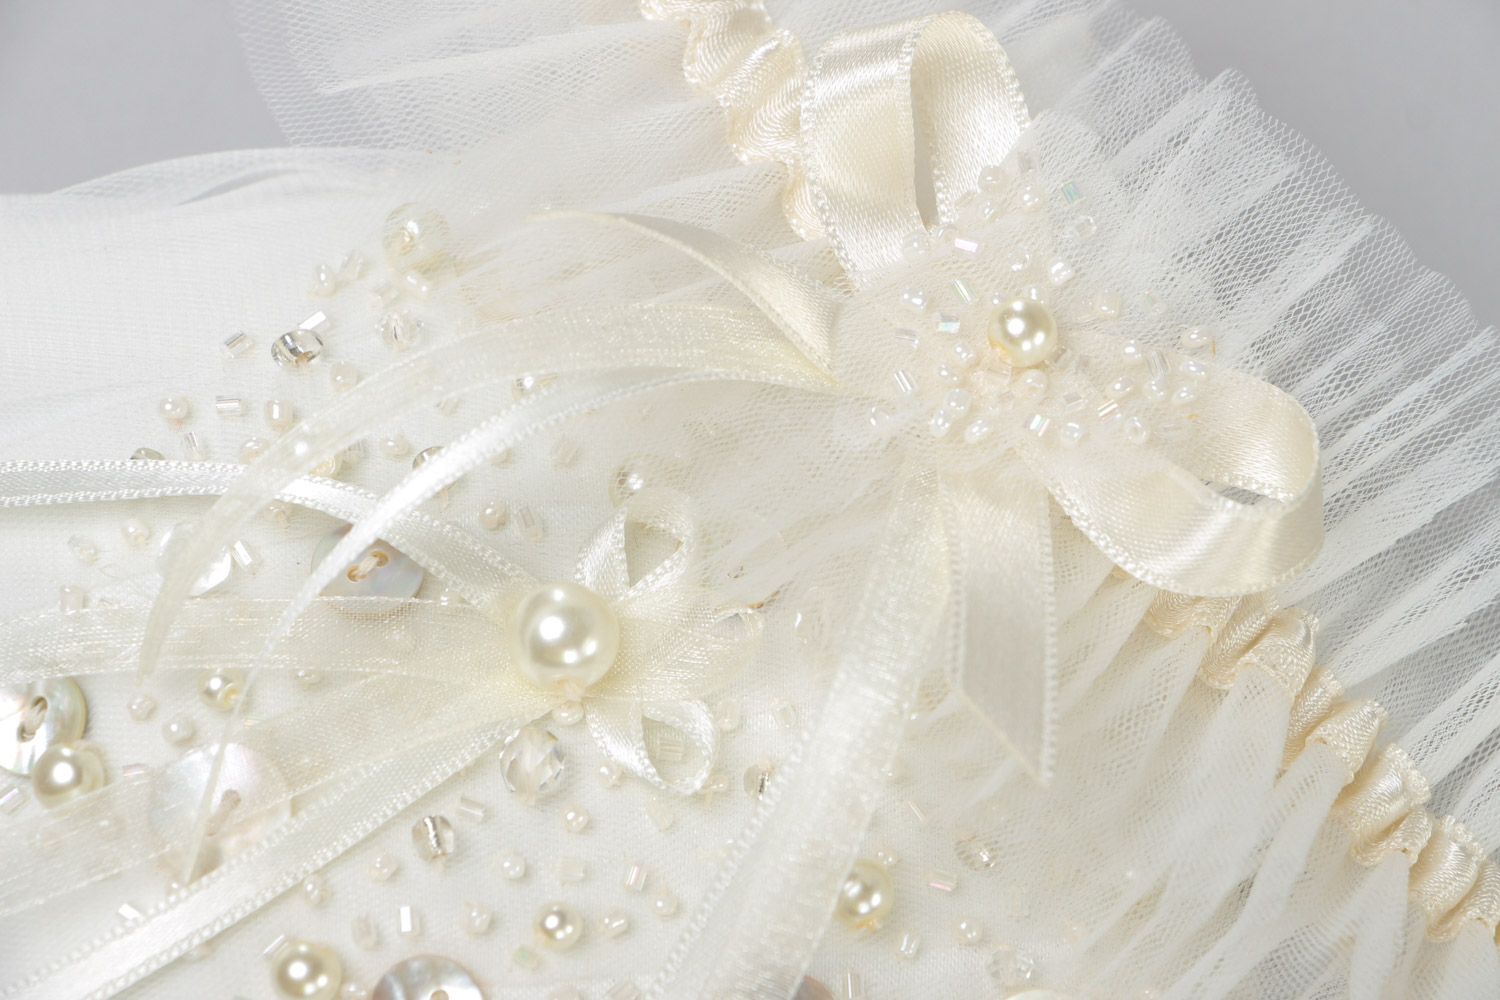 Handmade wedding accessories set 2 items bridal garter and ring bearer pillow Ivory photo 4